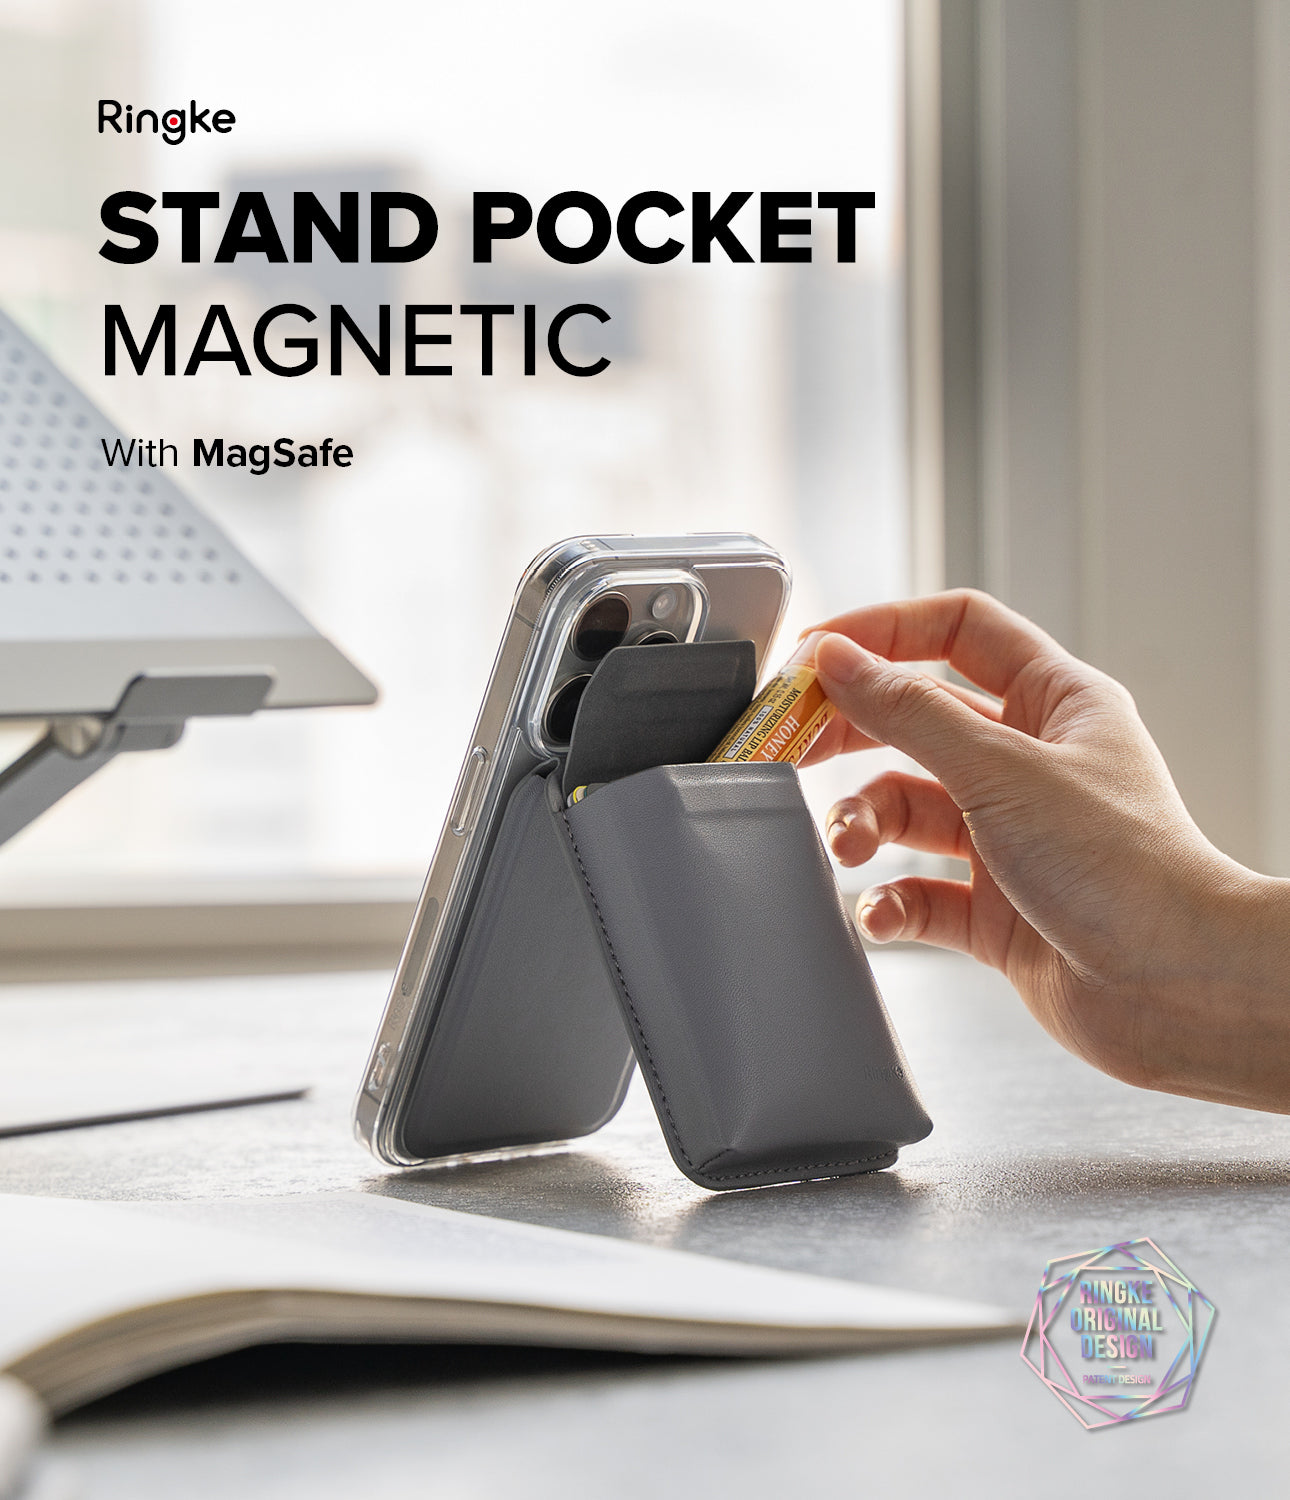 Ringke Stand Pocket Magnetic - By Ringke